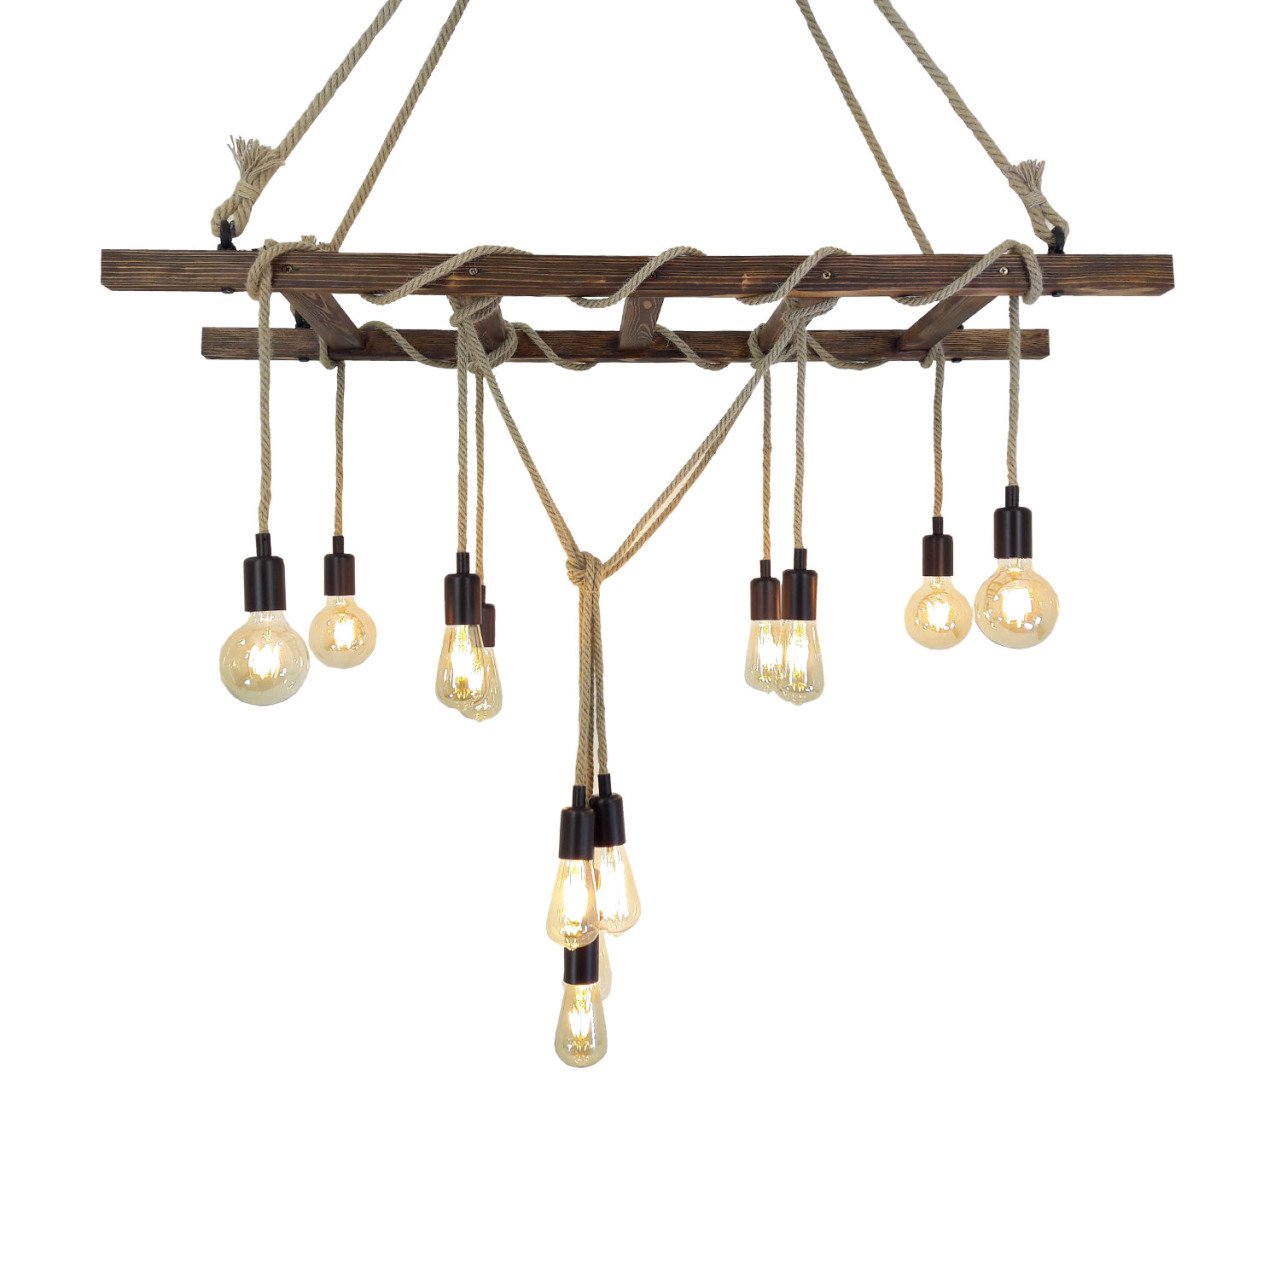 HT073 | XLarge, Wood Ladder Chandelier, 140x42 cm, 12 Bulbs | Industrial Houten Ladder Hanglamp